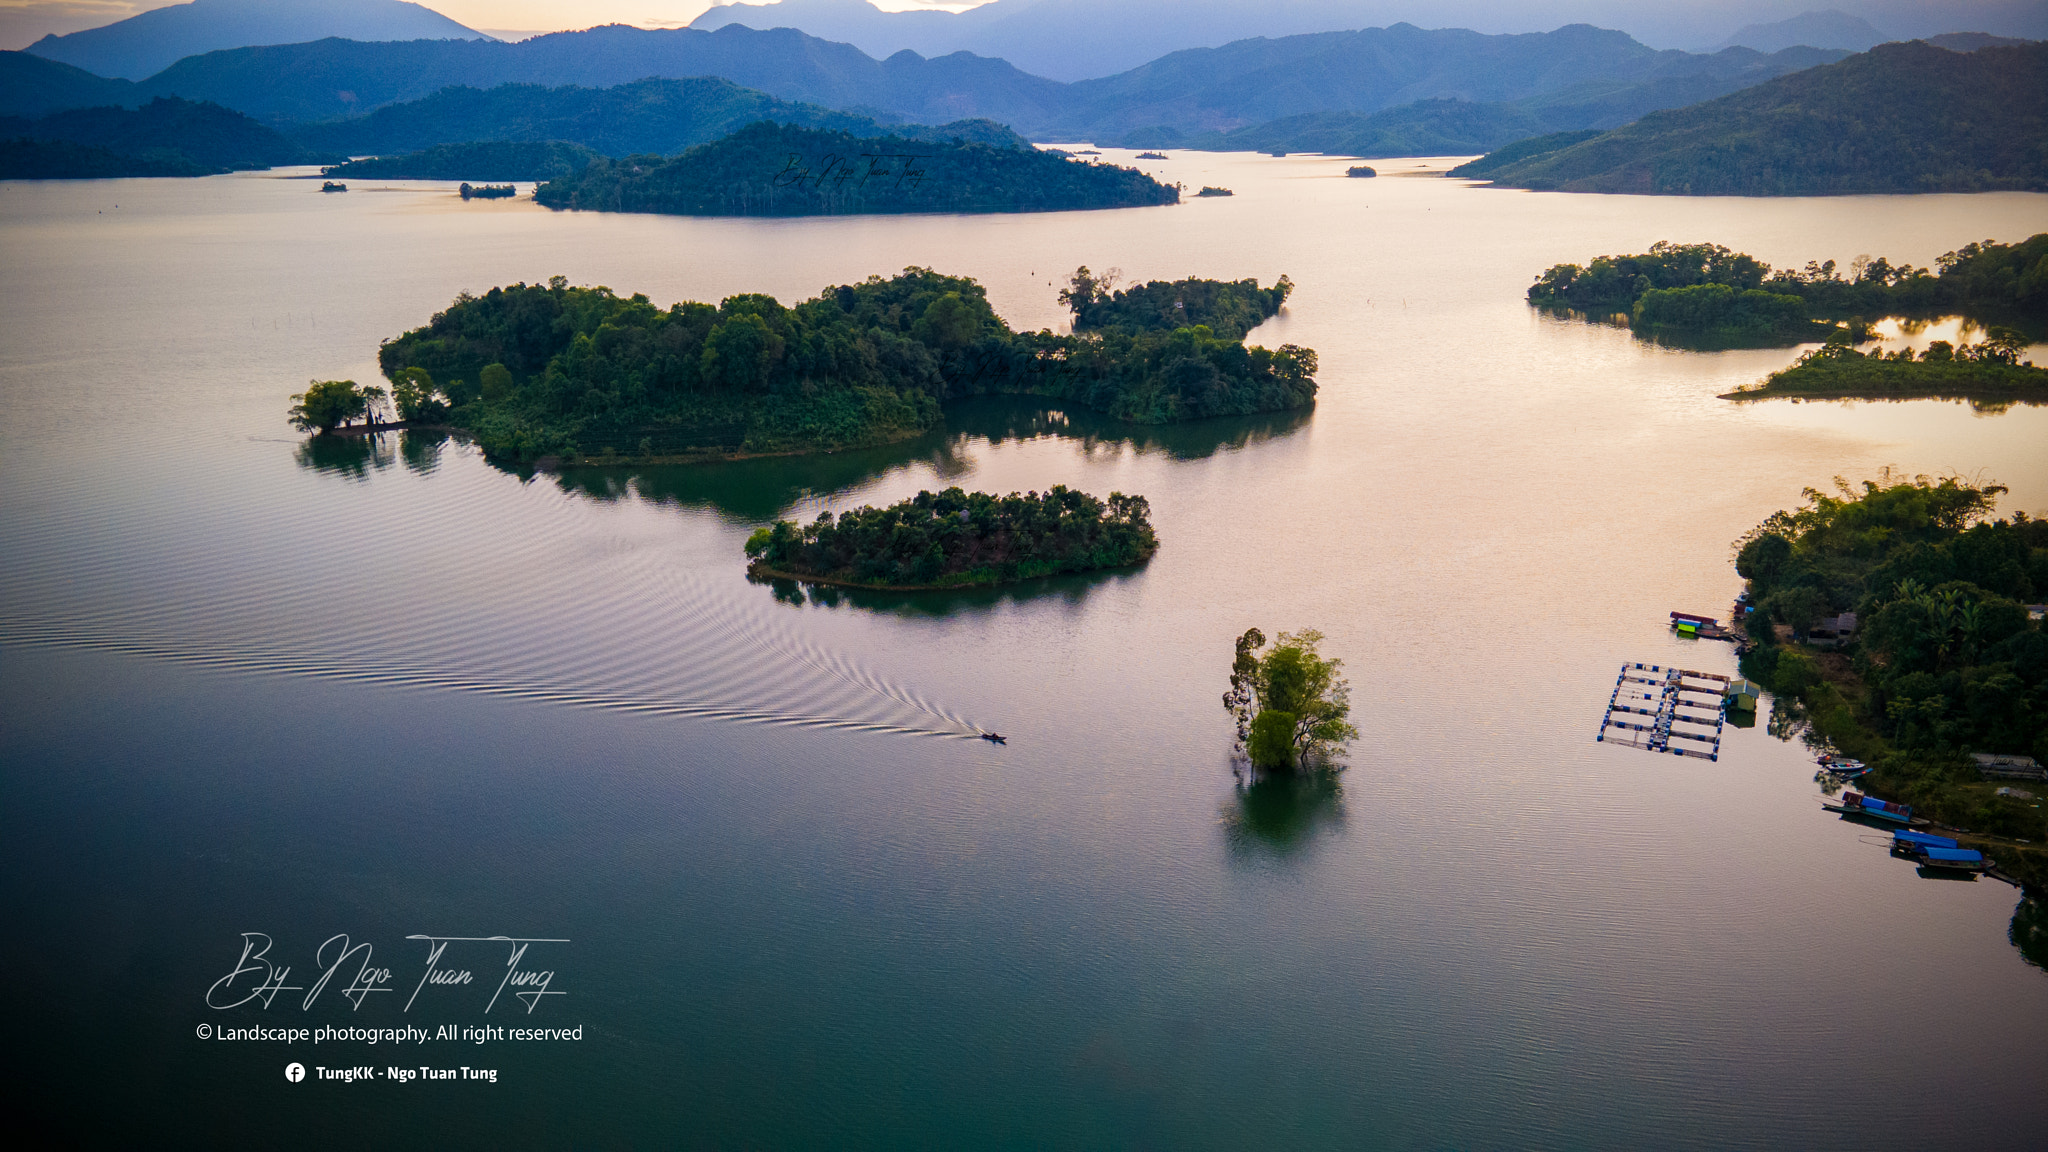 Sunset Nui Coc Lake, Thai Nguyen, Viet Nam by Tung Ngo Tuan on 500px.com